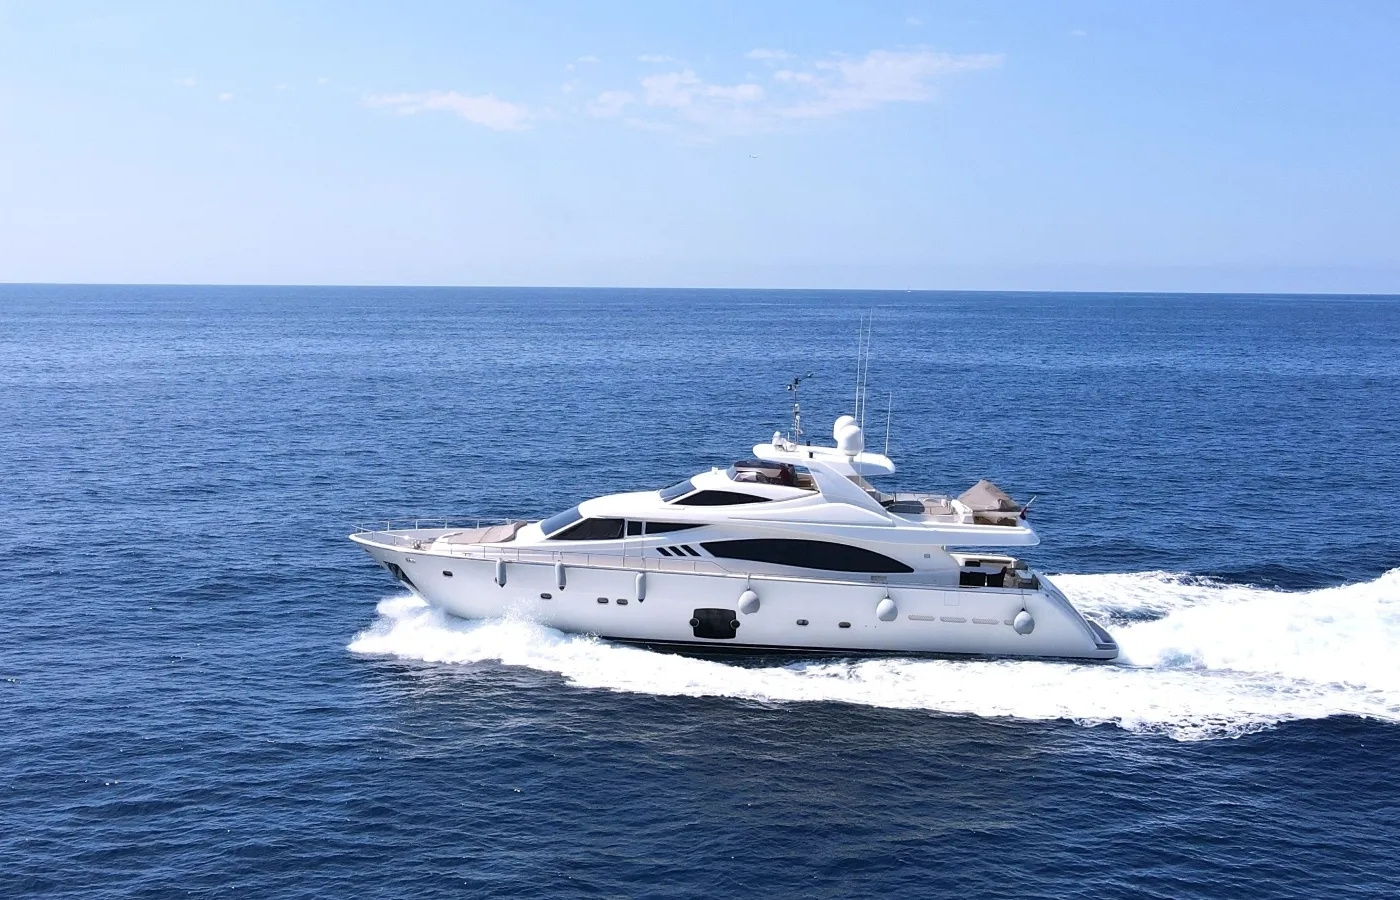 Ferretti Motor Yacht GONEEDAYS III Listed for Sale [In the News]